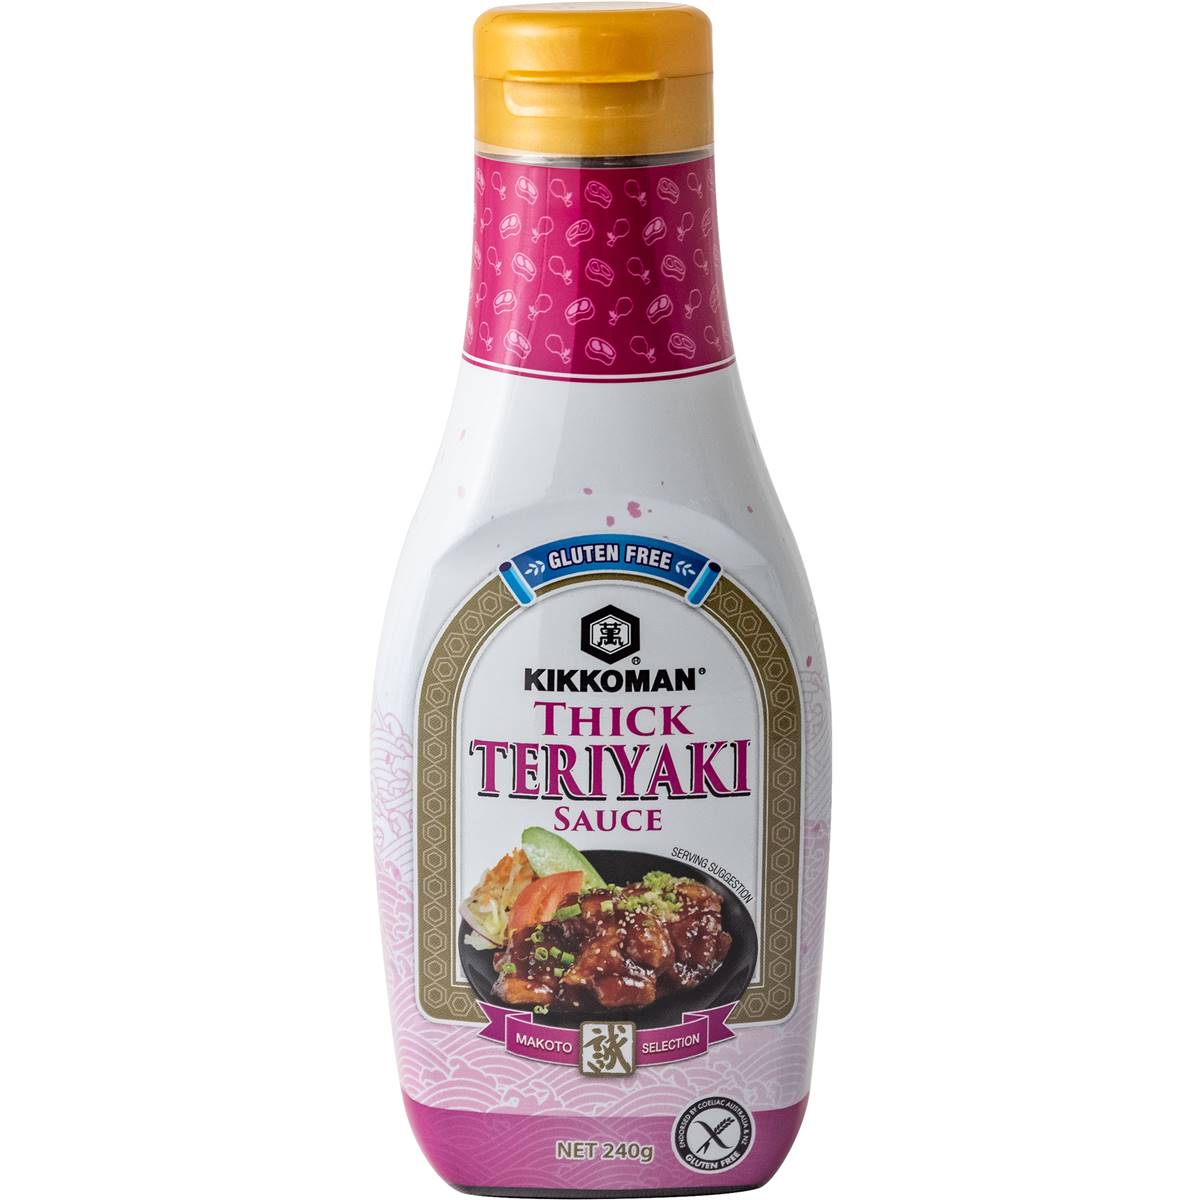 Kikkoman Thick Teriyaki Sauce Gluten Free 240g